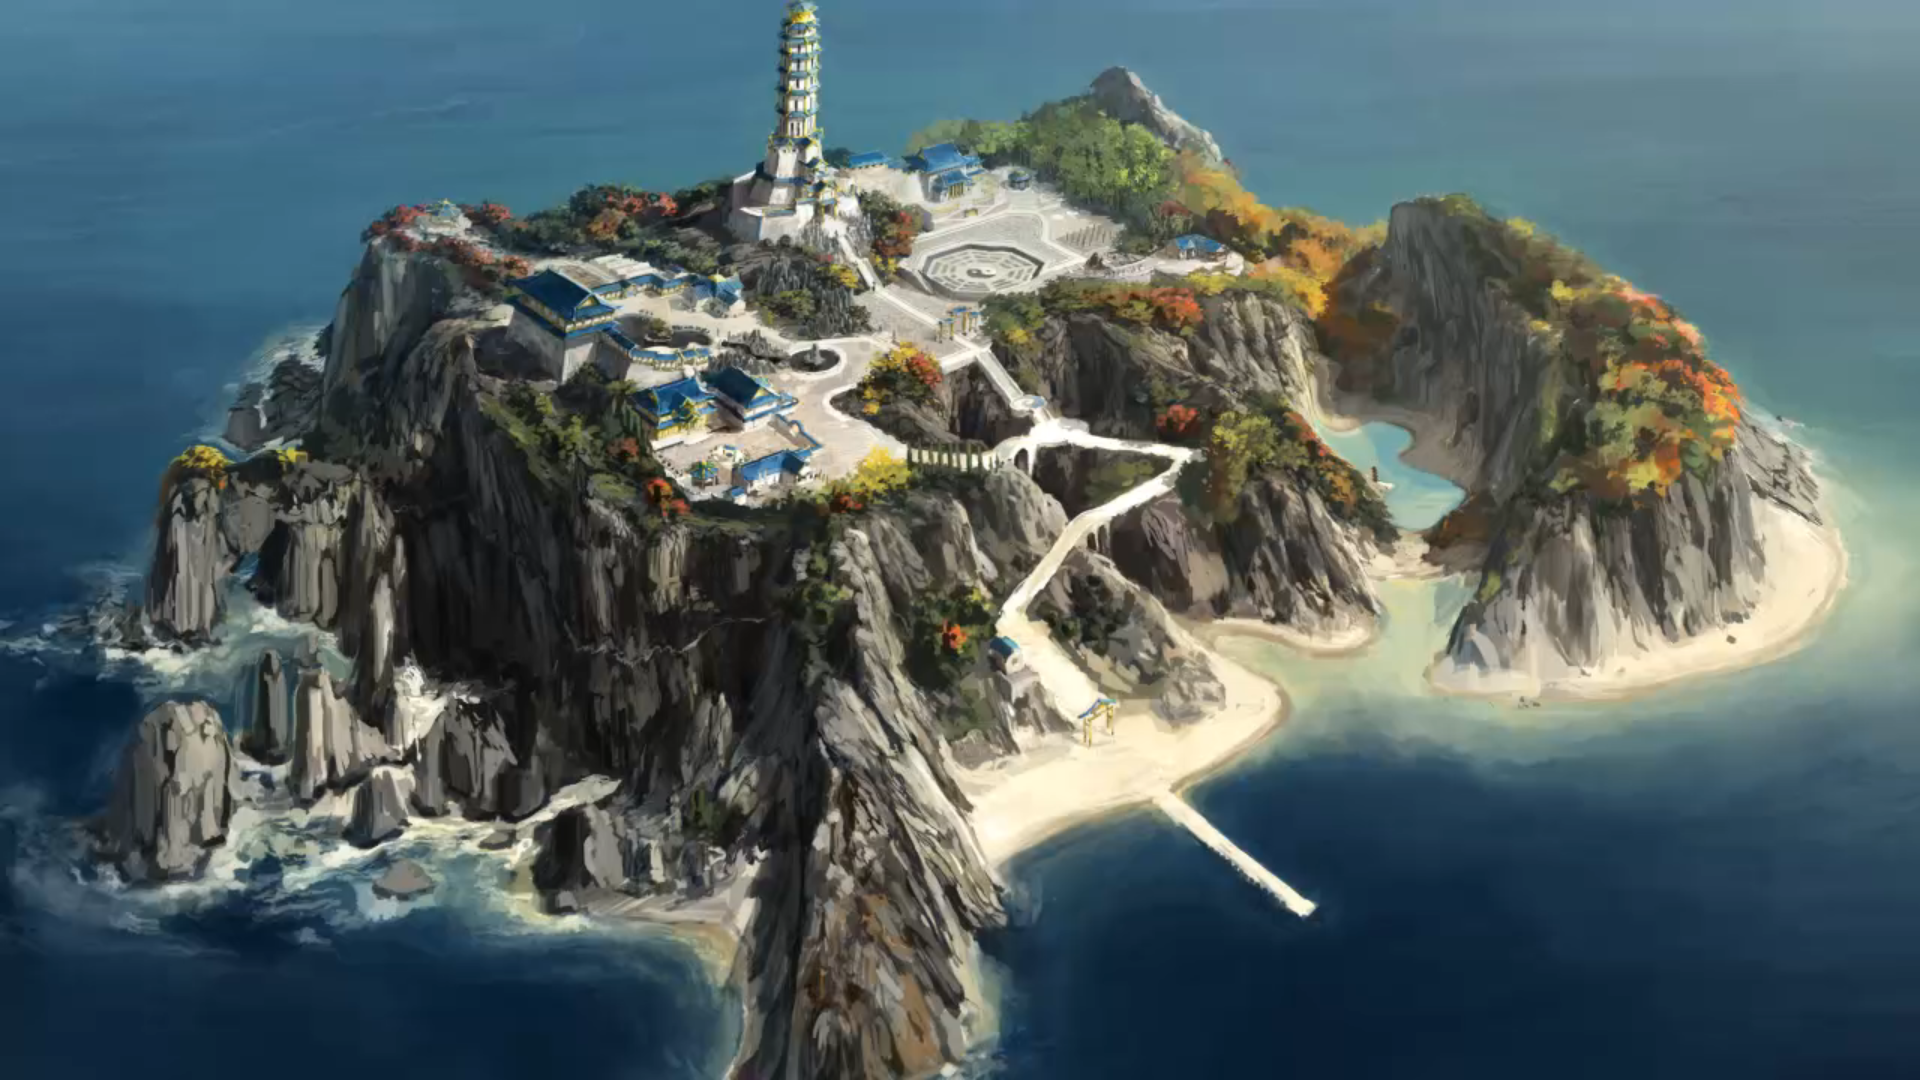 Аватар корра островной храм воздуха.